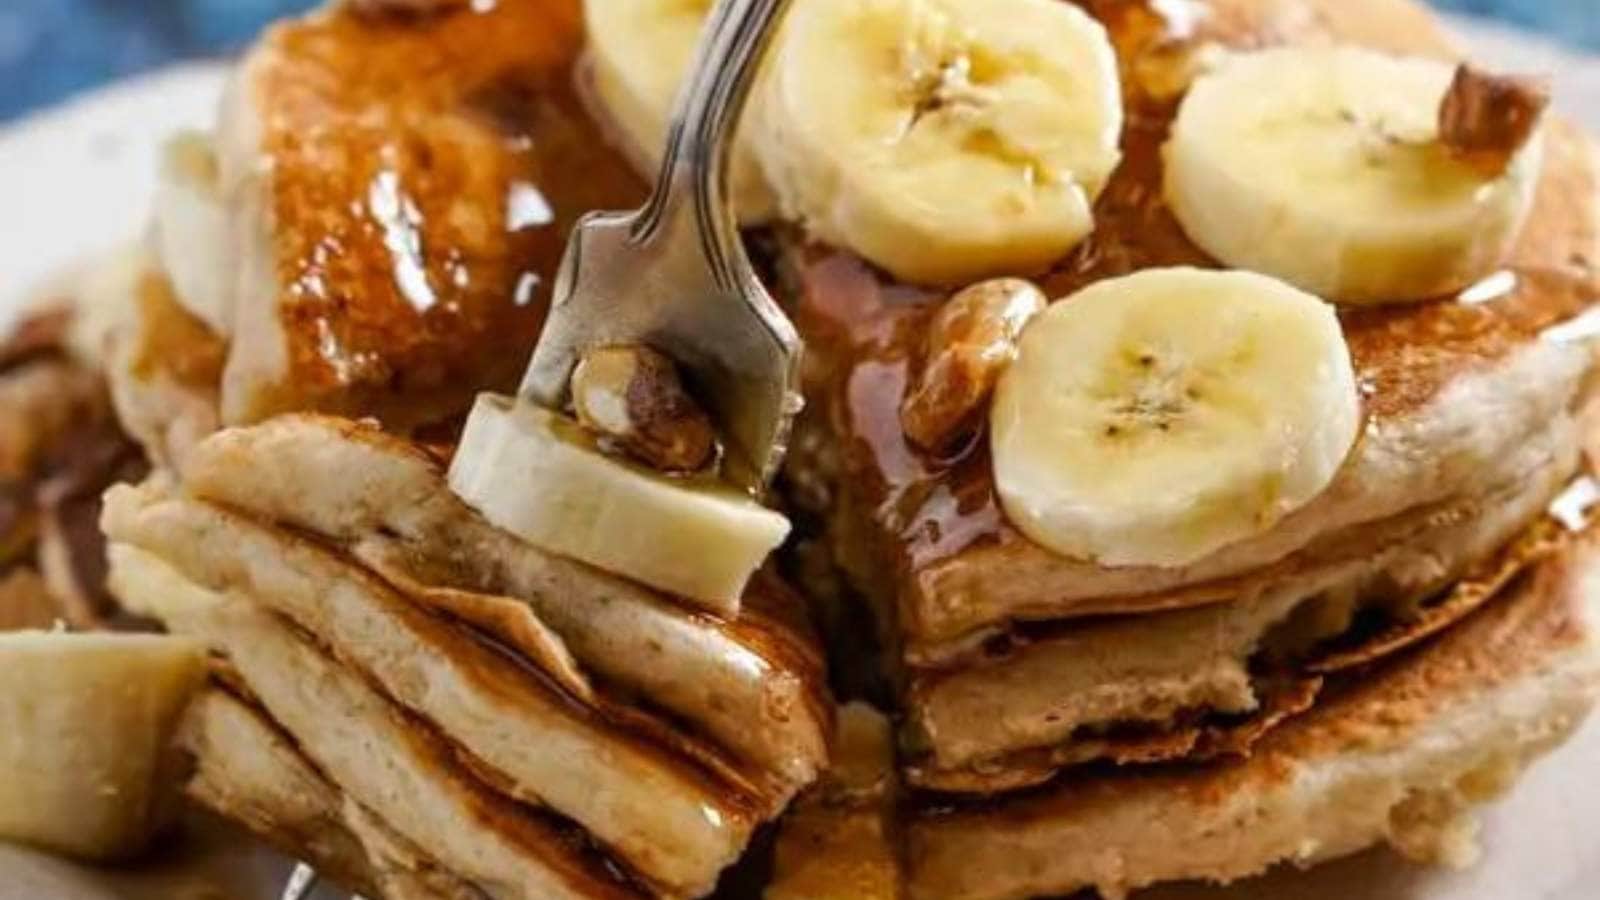 Banana Pancakes recipe by Accidental Happy Baker.